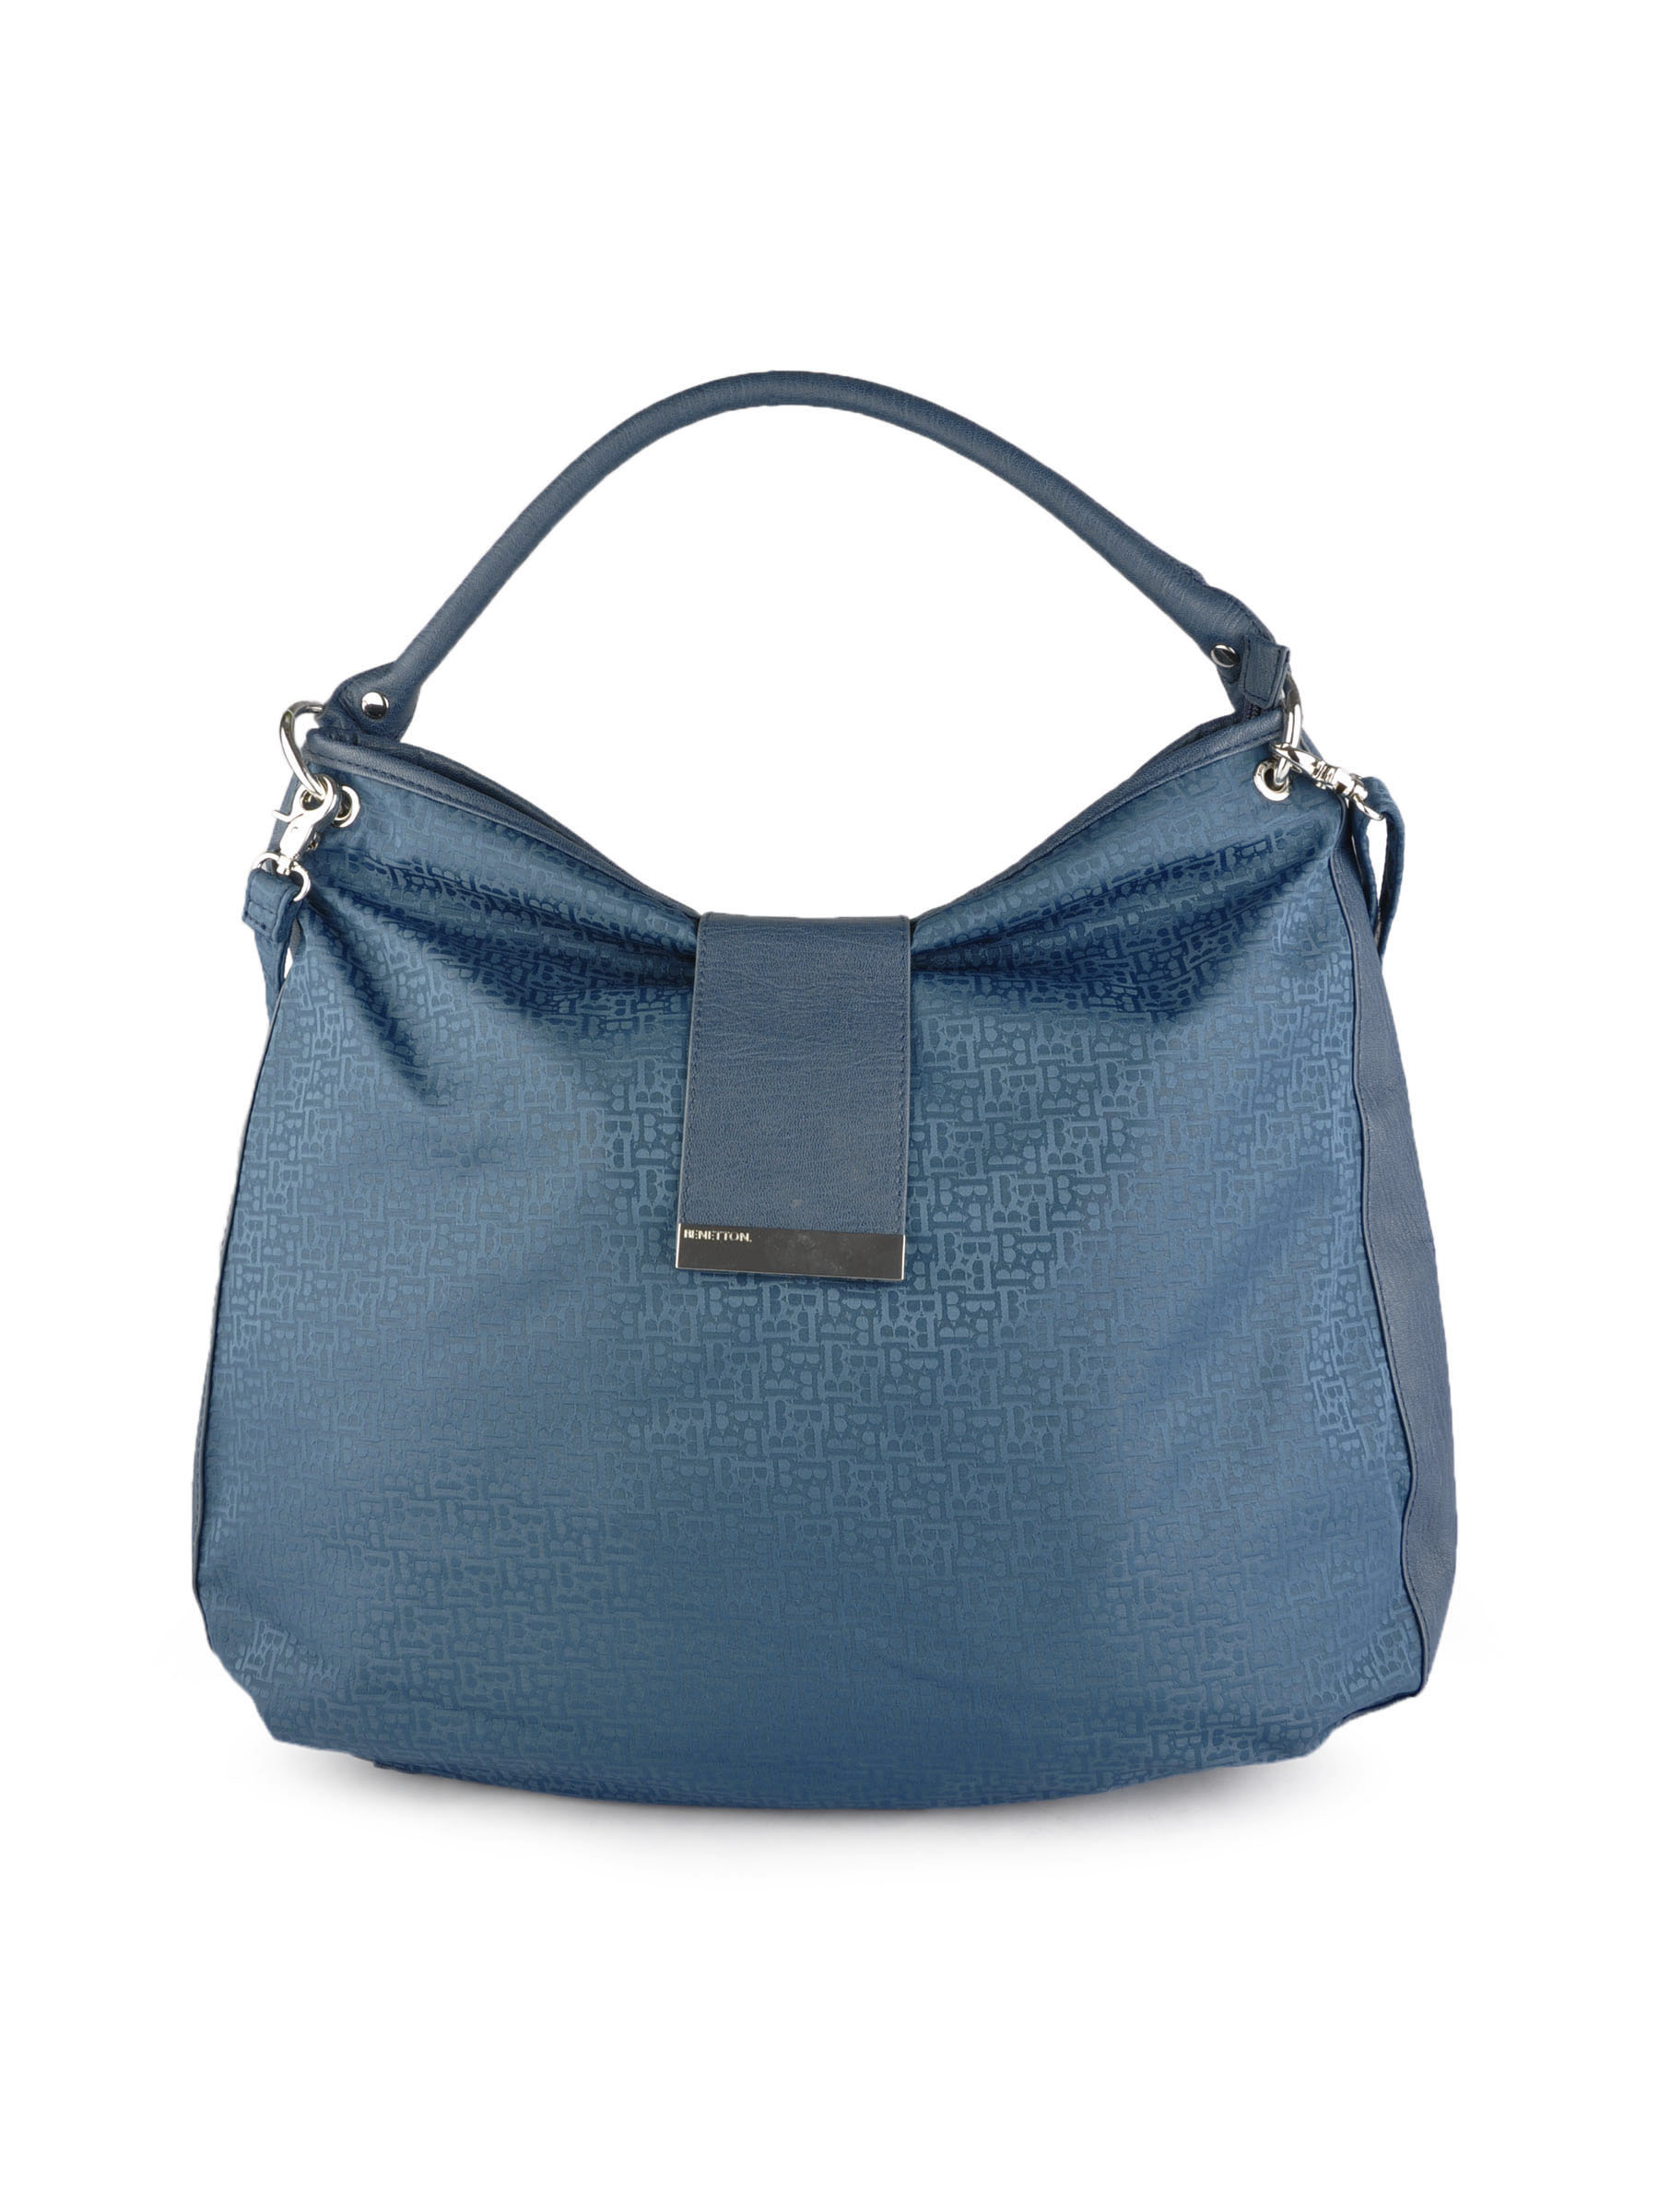 United Colors of Benetton Women Solid Blue Handbags